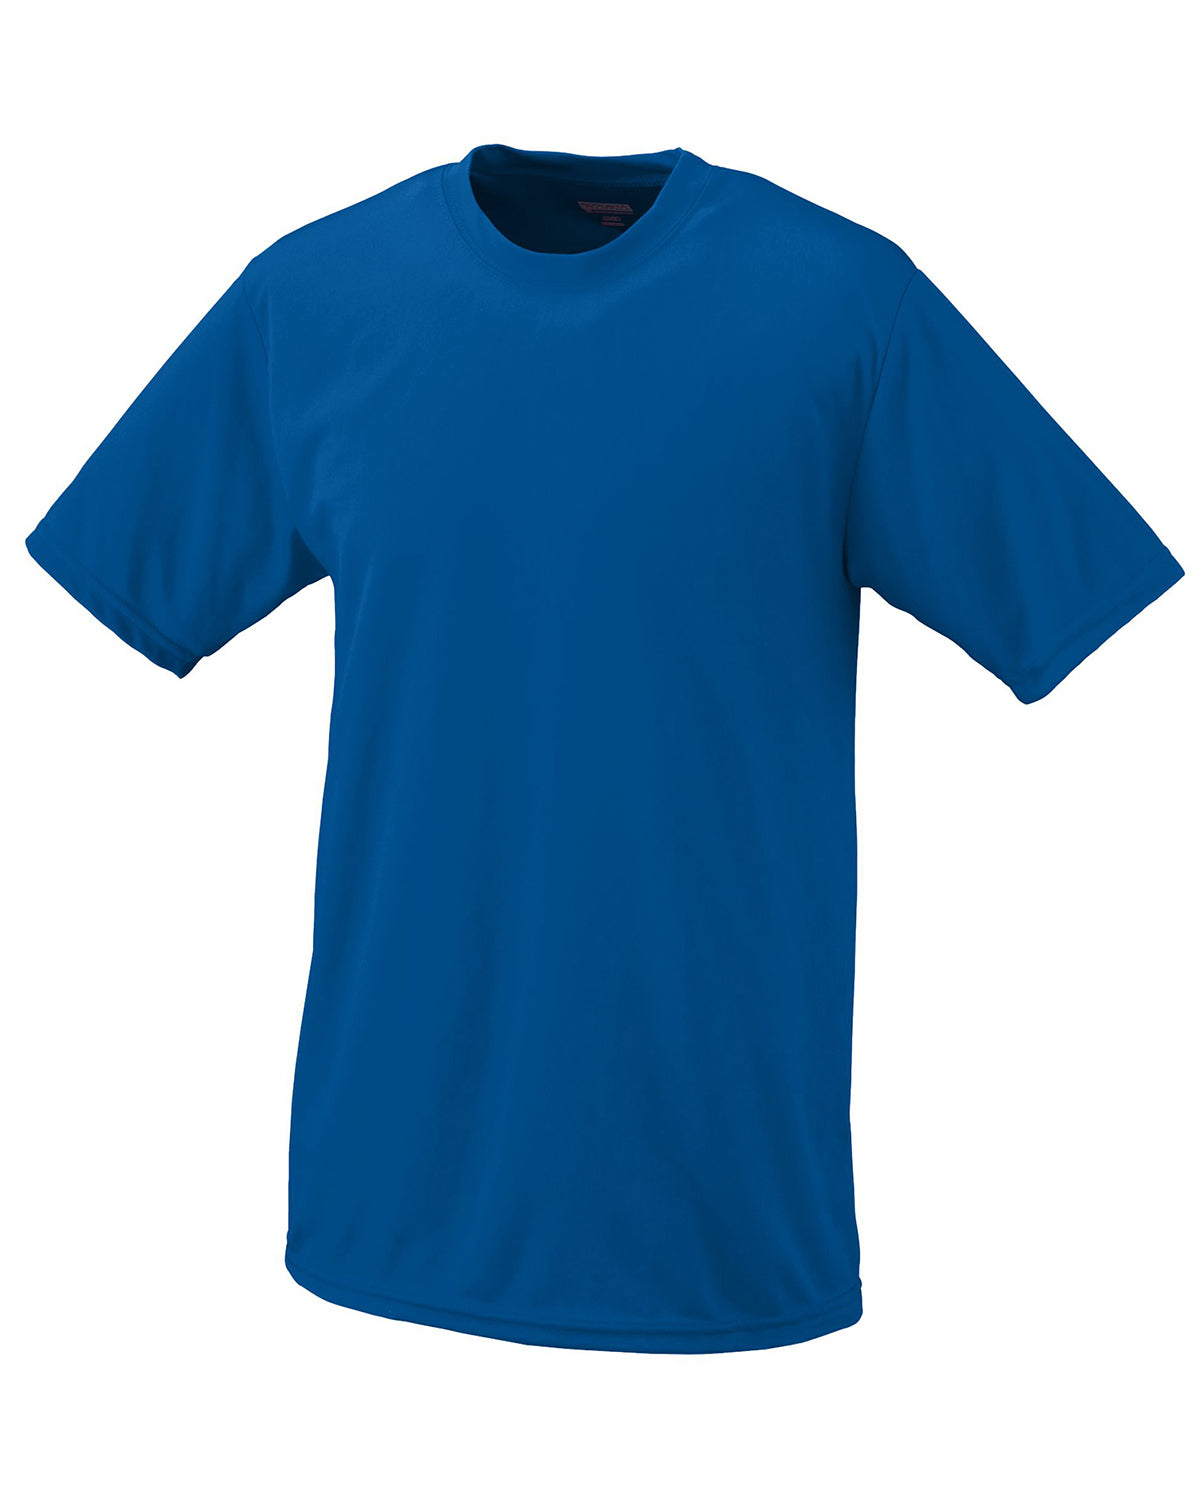 Performance Unisex T-Shirt